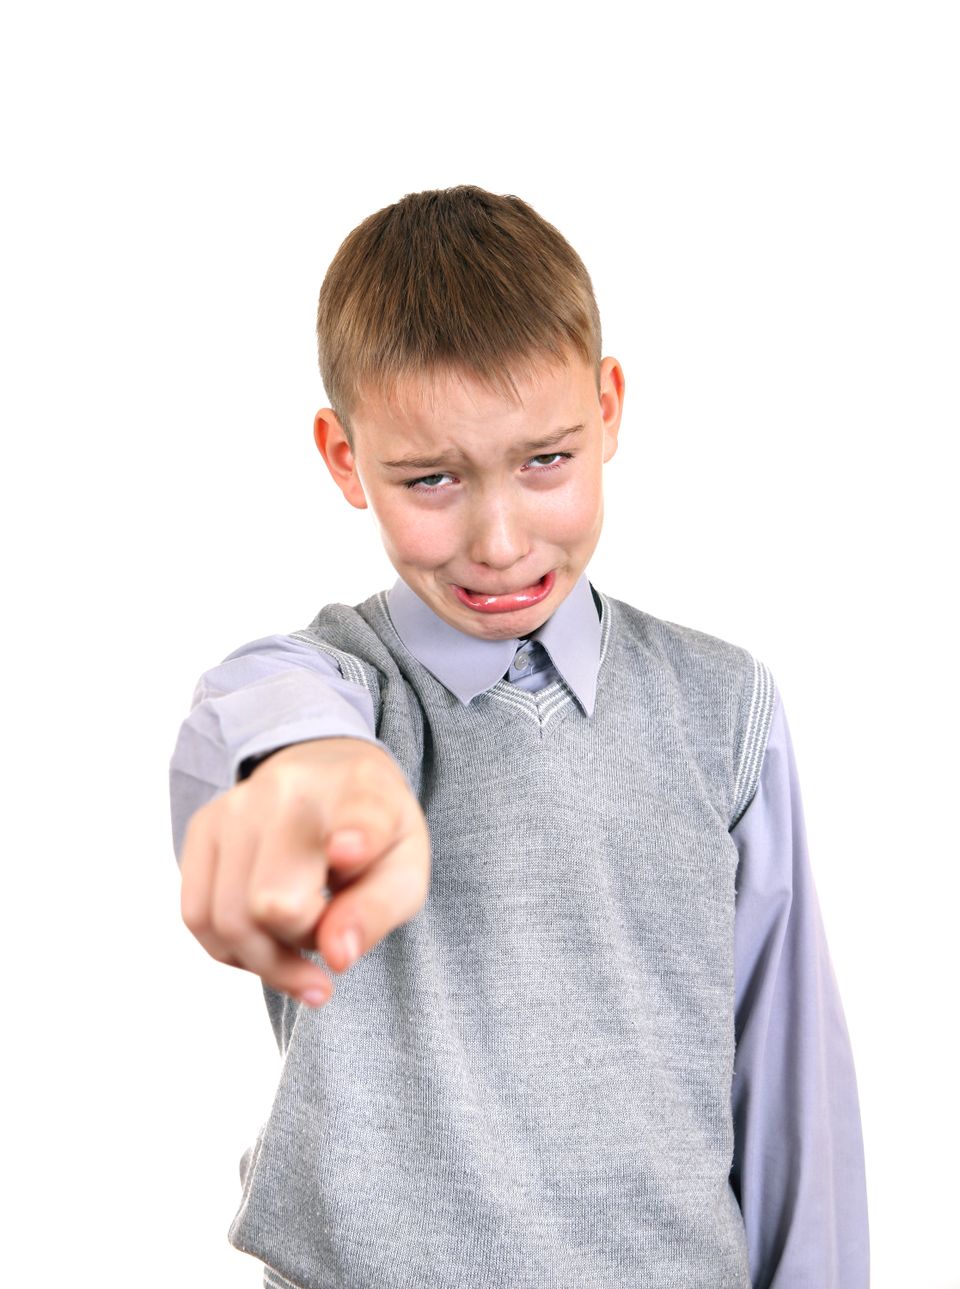 En gutt med kort hår, skjorte og vest står og peker mot fotografen og lager en ukomfortabel, skyldig grimase.